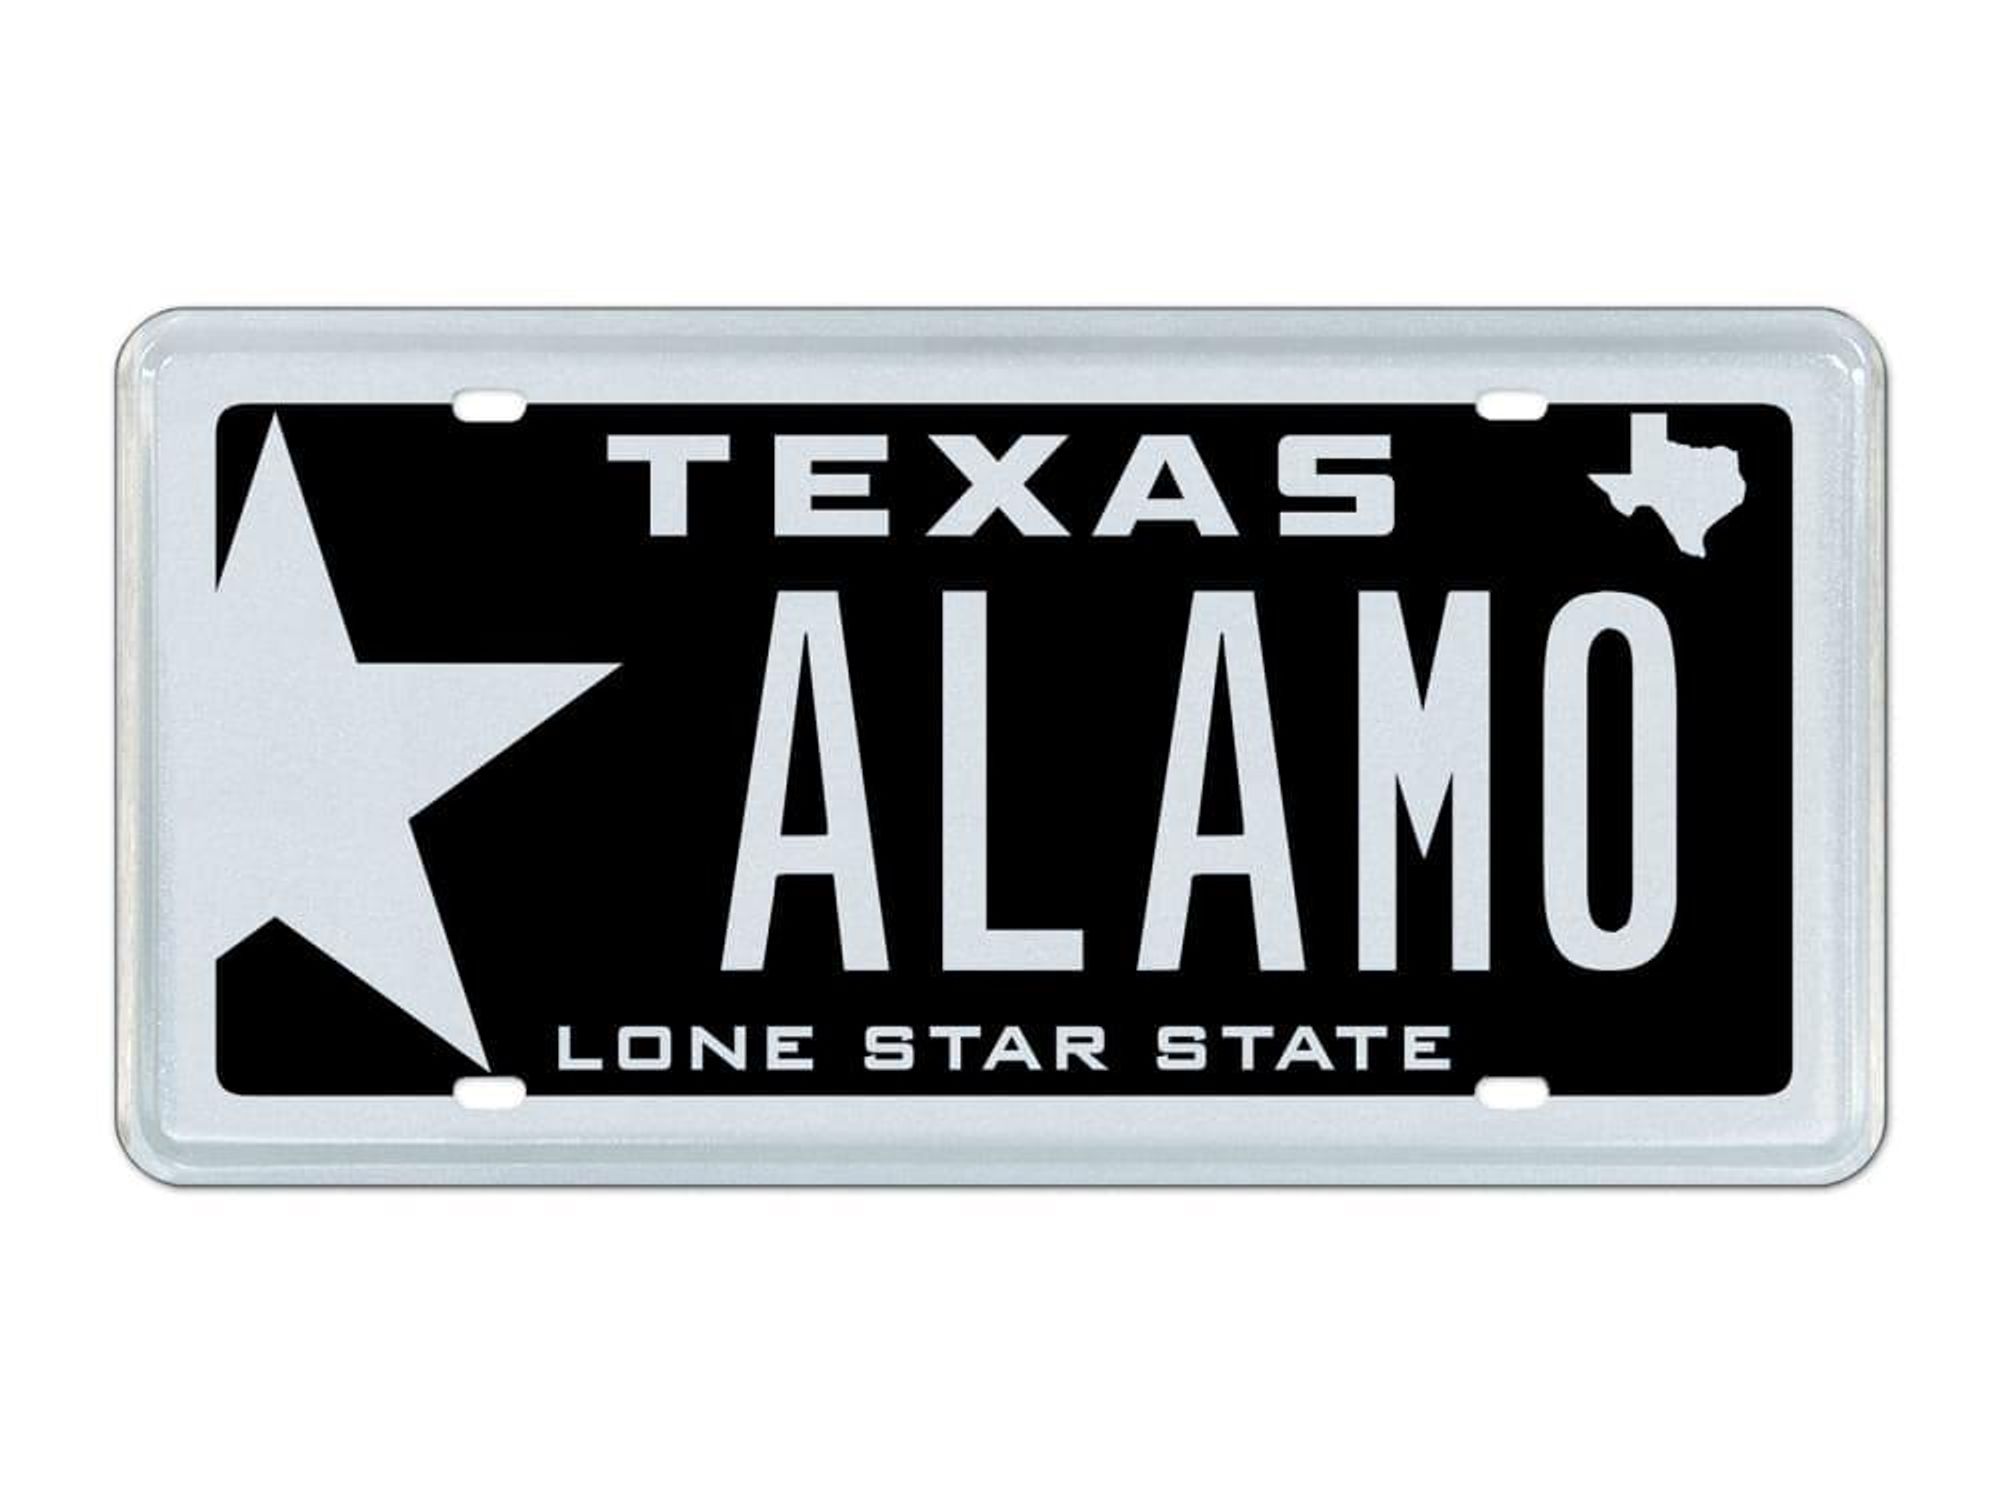 Alamo Texas license plate February 2016 auction